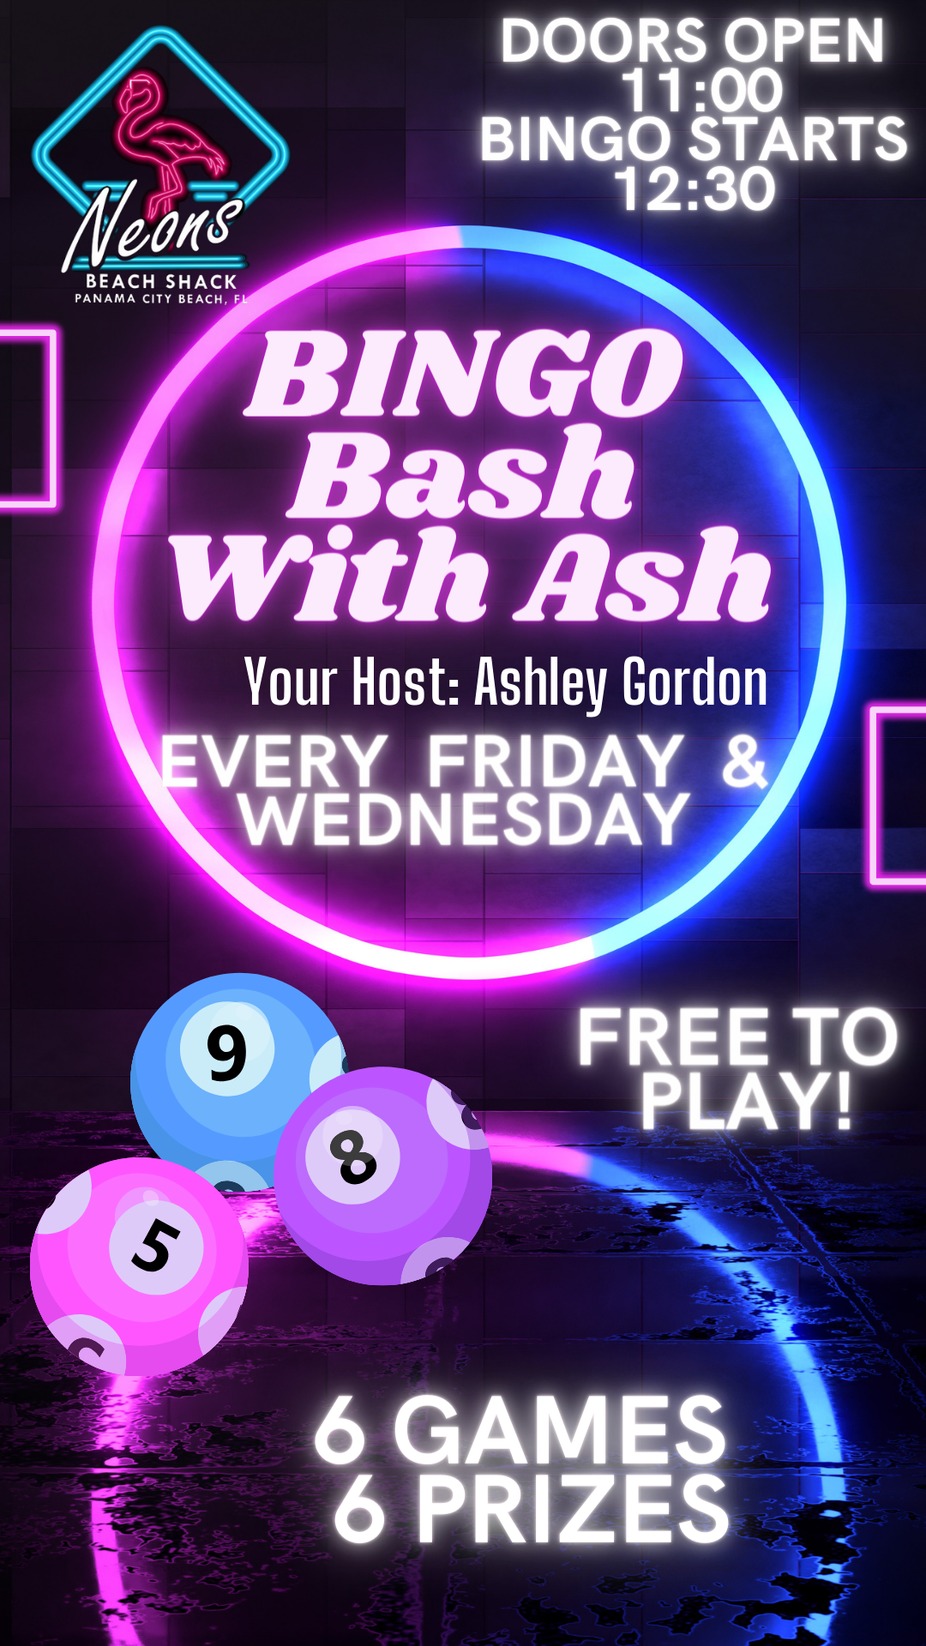 Bingo Bash with Ash Friday's 12:30 event photo